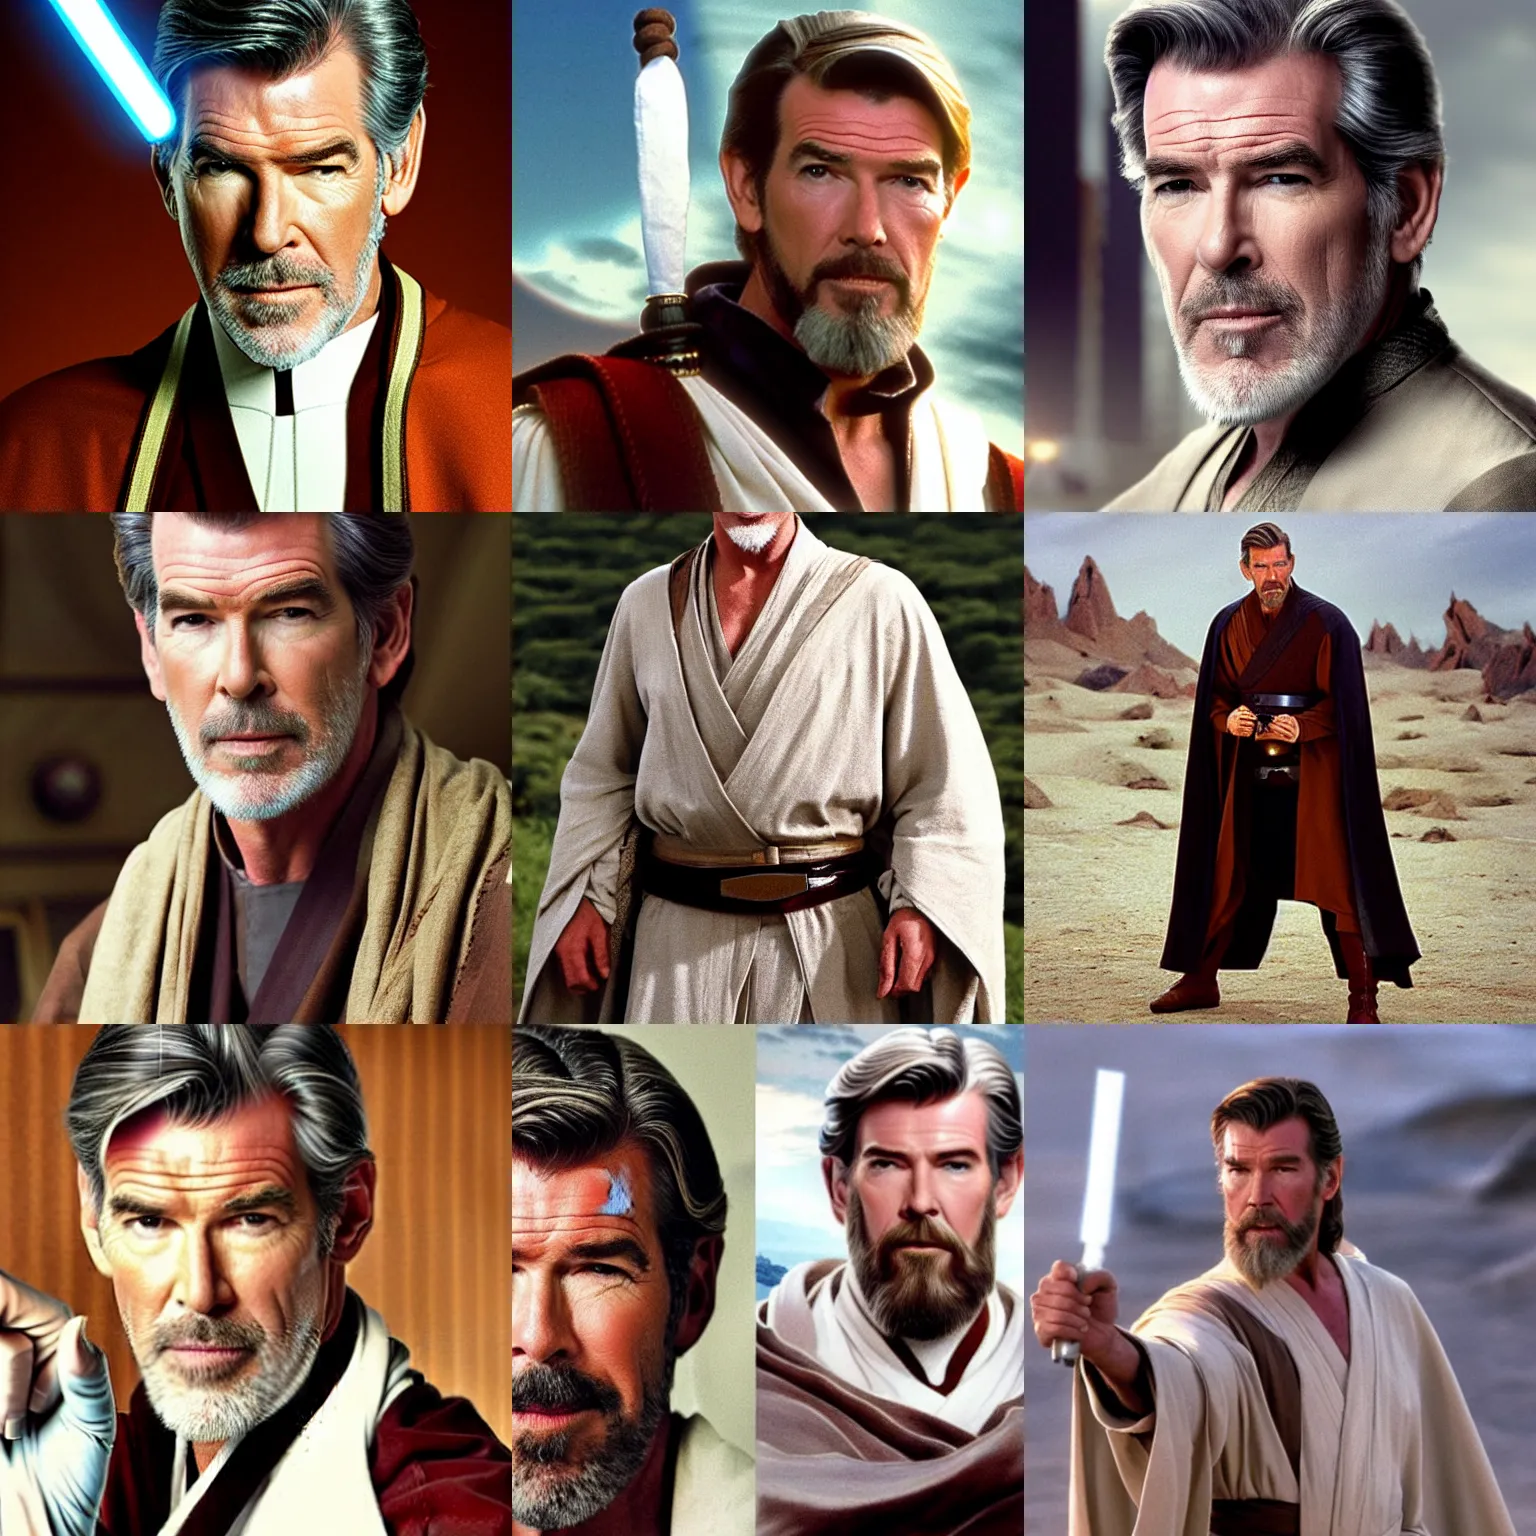 Prompt: Pierce Brosnan as Obi-Wan Kenobi